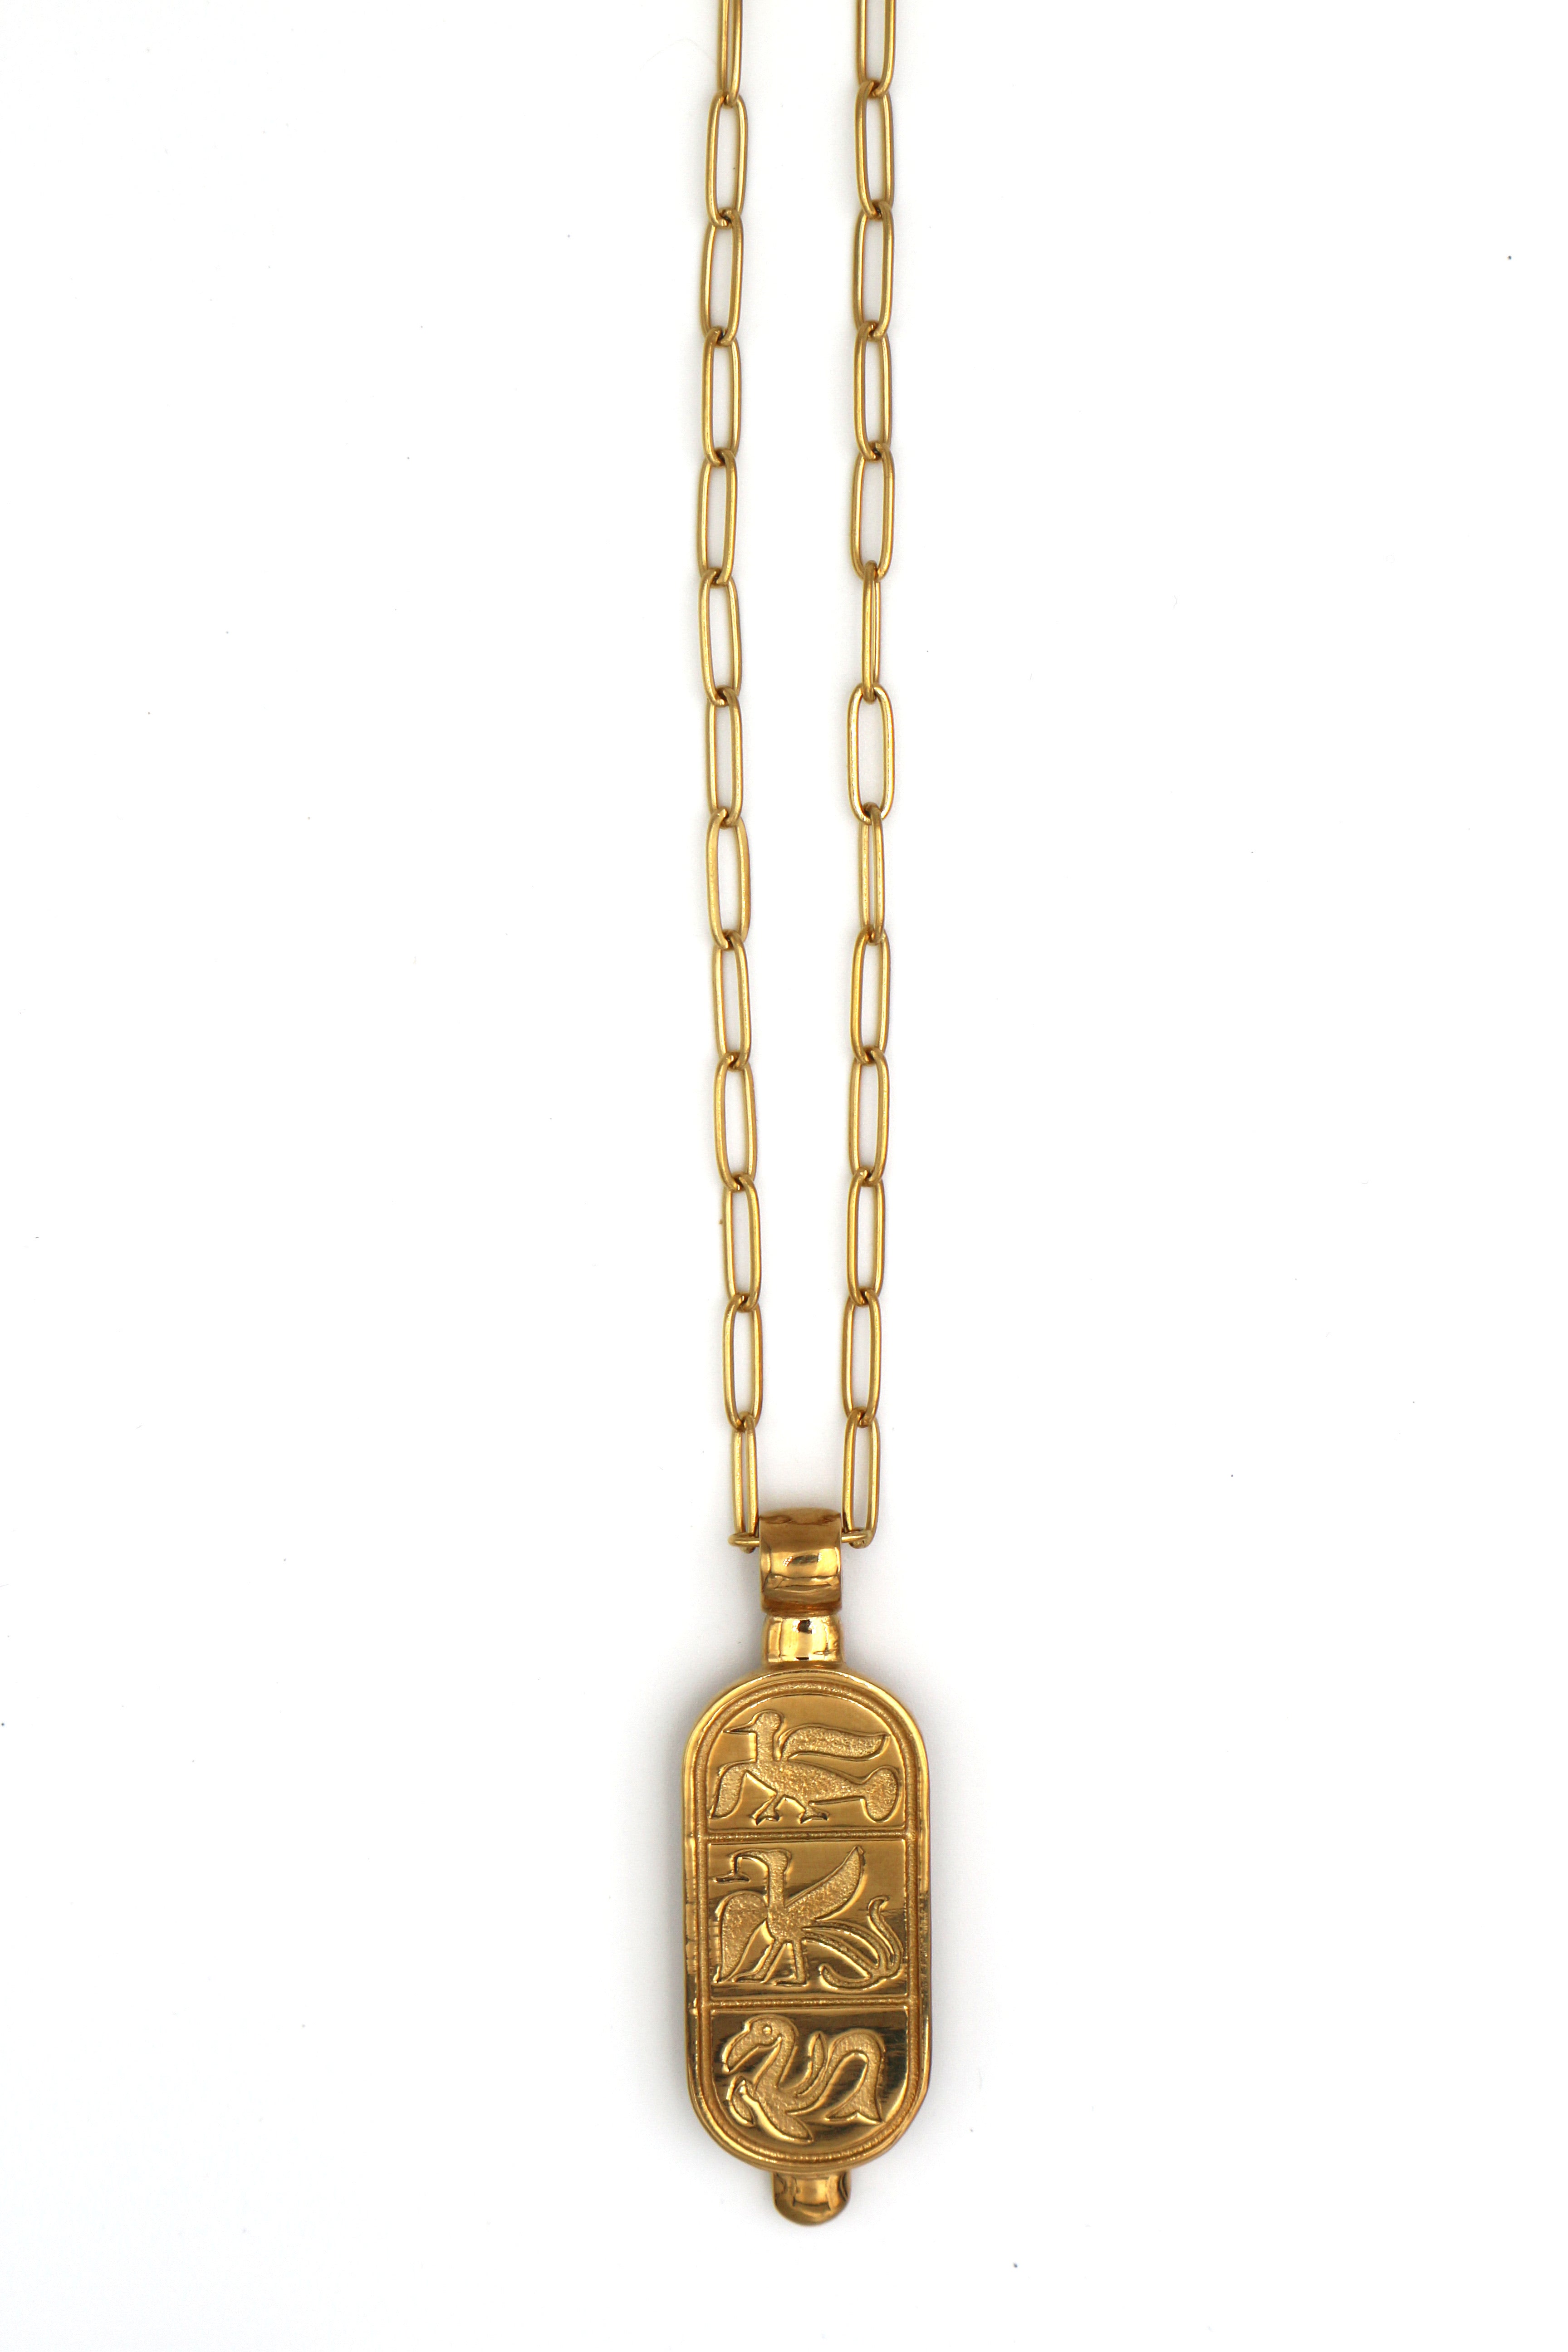 ODYSSEY // The Hieroglyphic Amulet